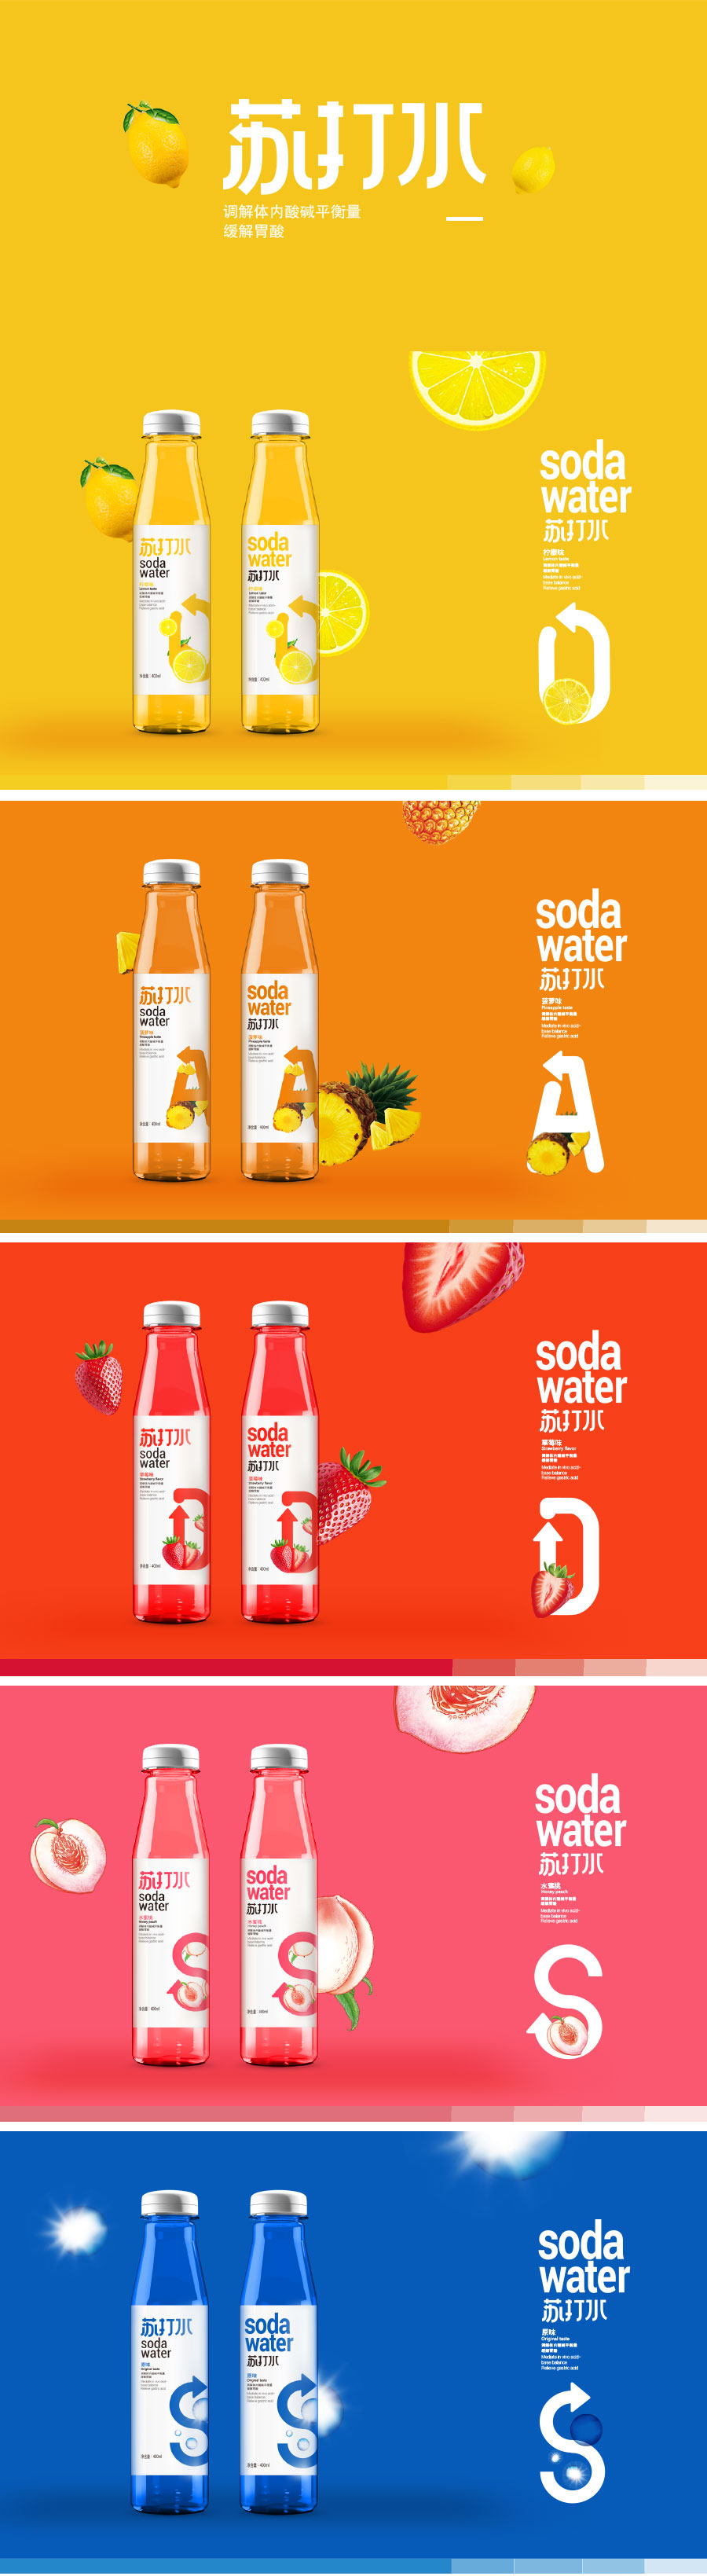 【soda】苏打水系列包装设计